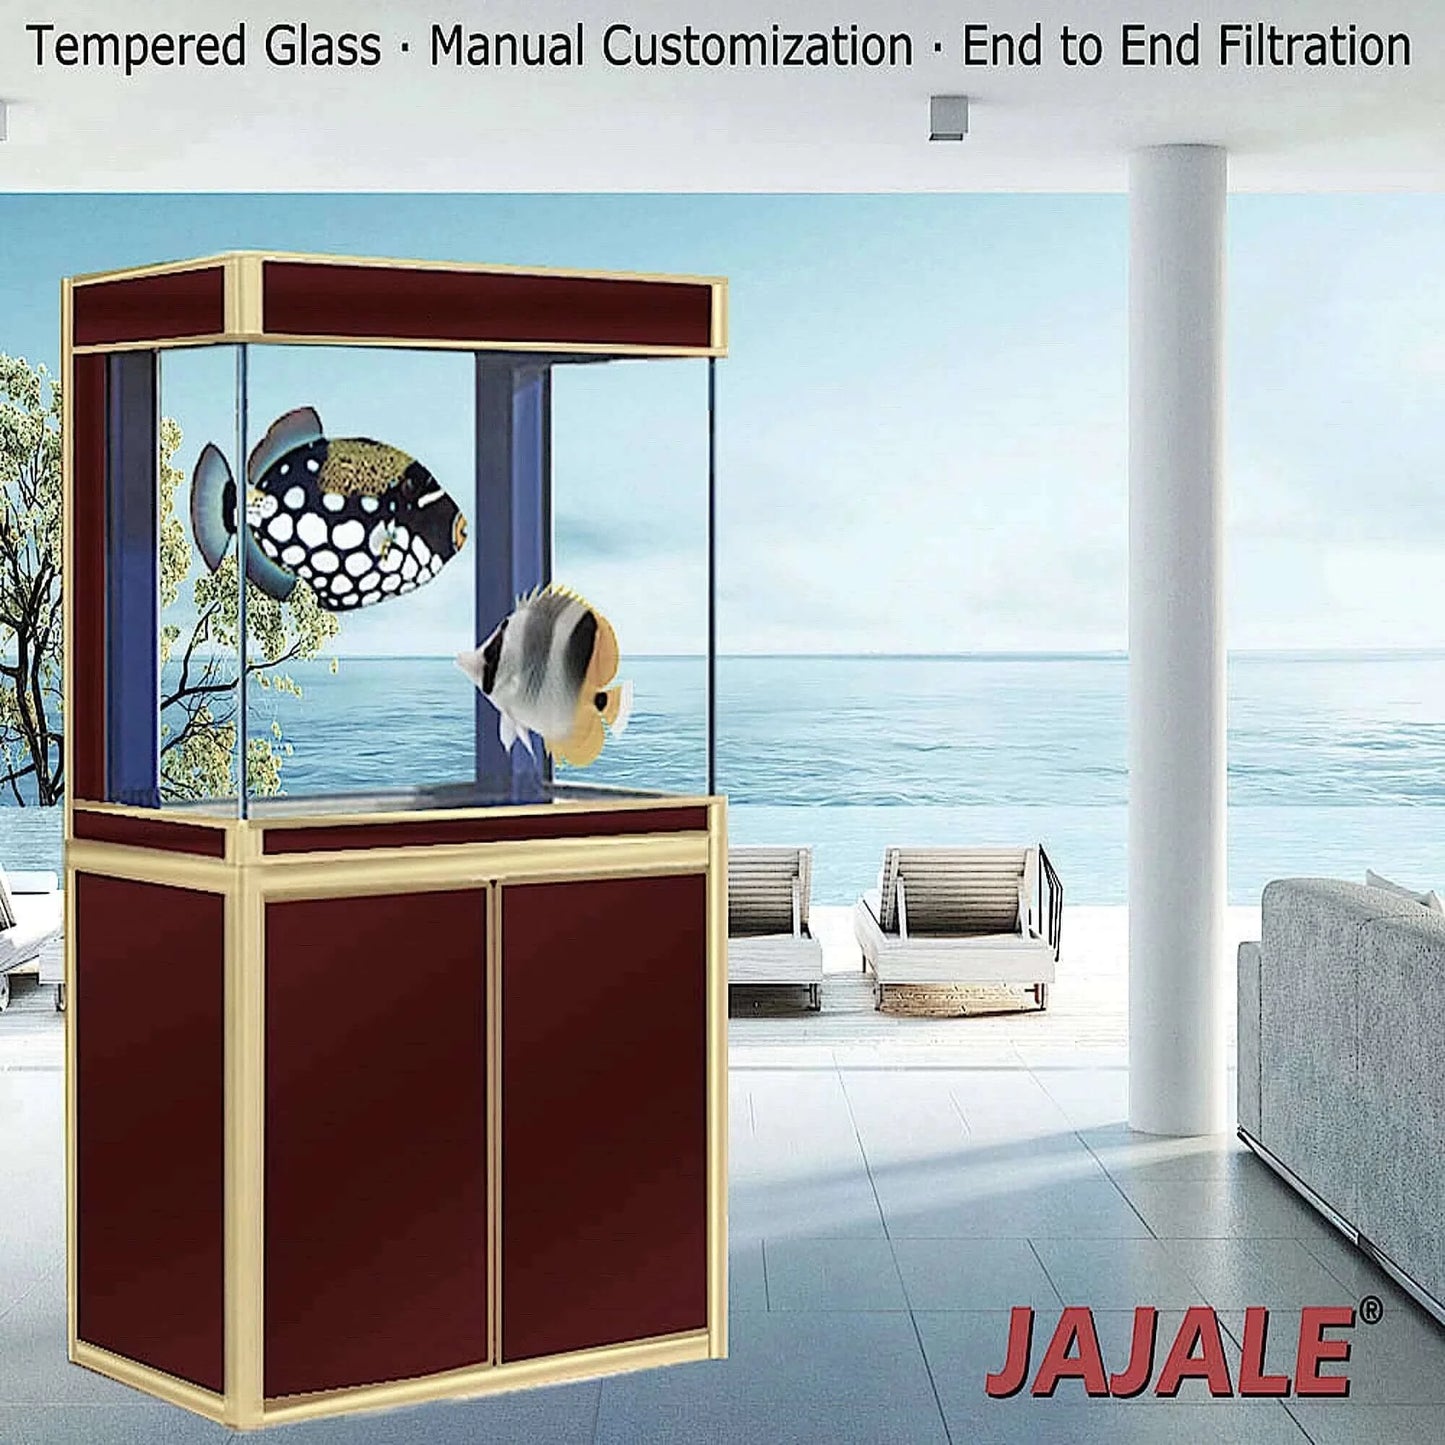 Aqua Dream 100 Gallon Tempered Glass Aquarium (Red and Gold)